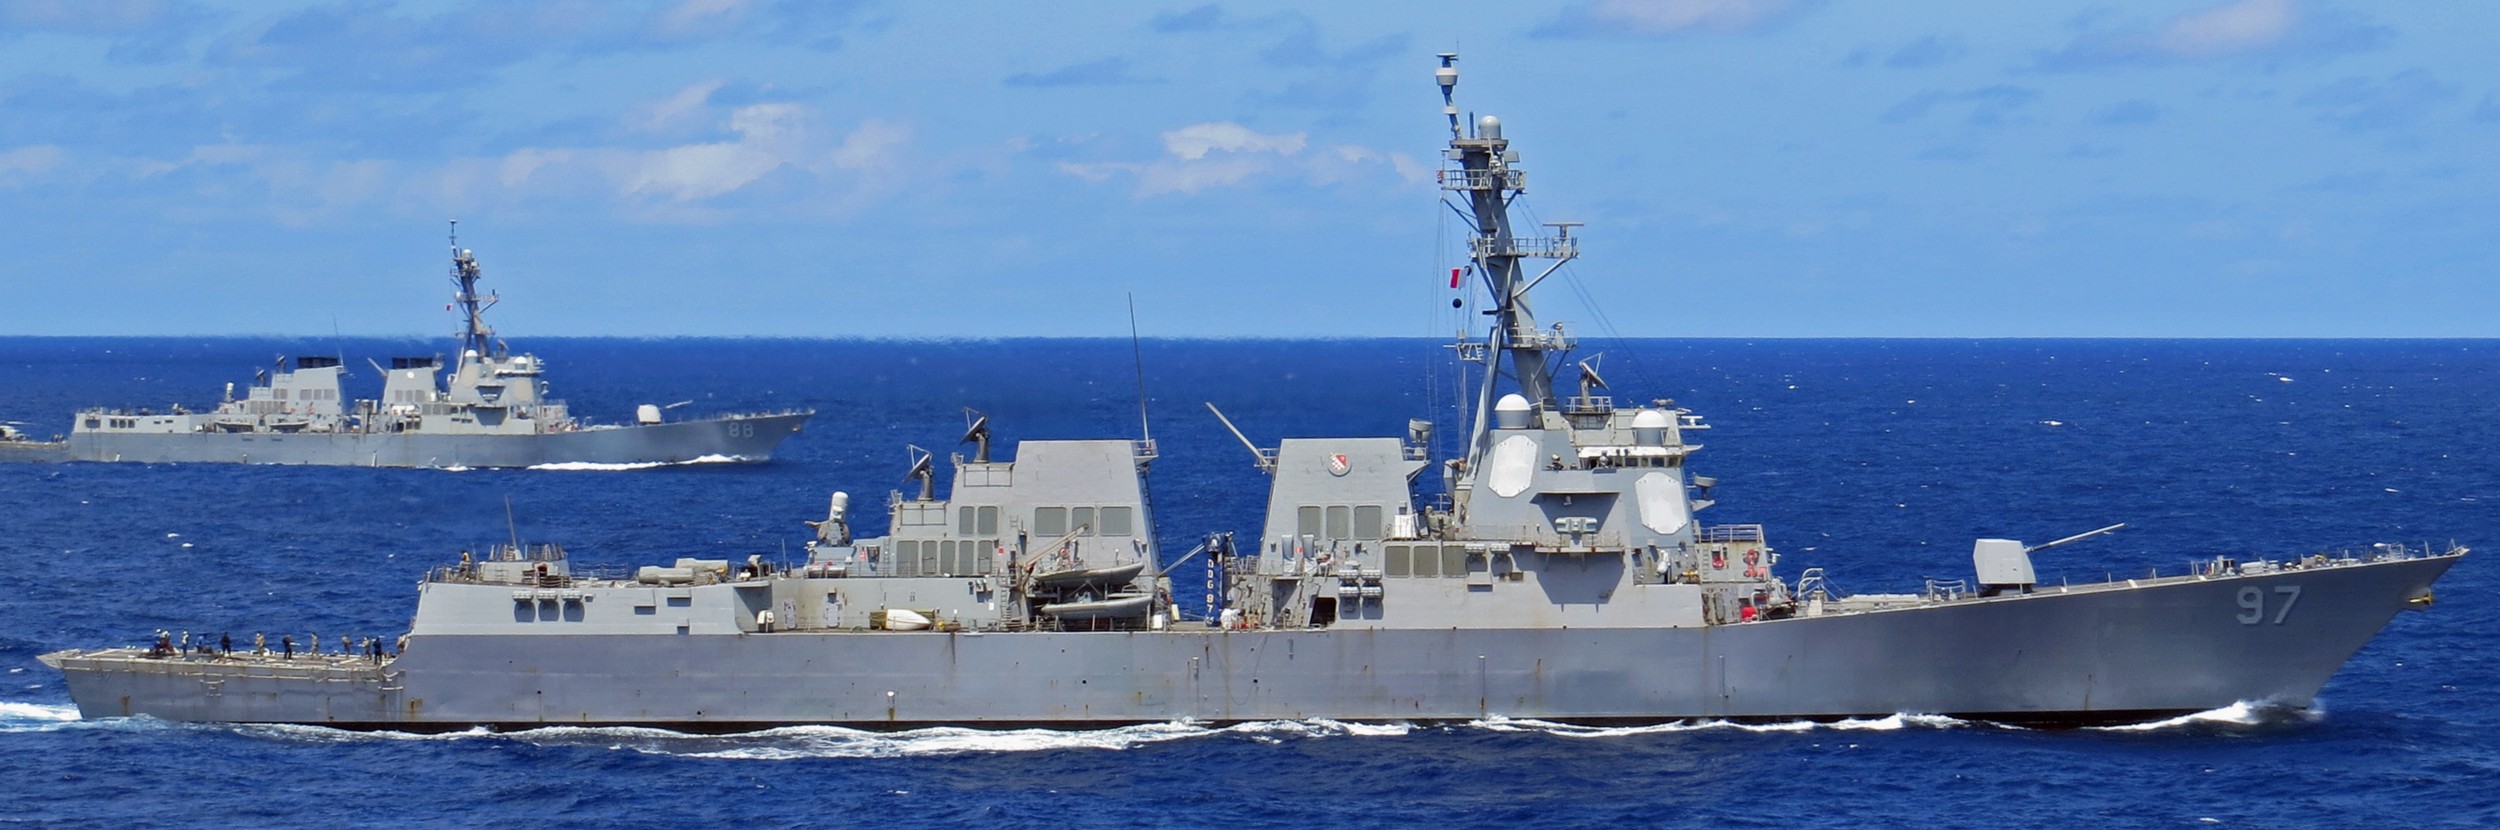 ddg-97 uss halsey arleigh burke class guided missile destroyer aegis us navy 67